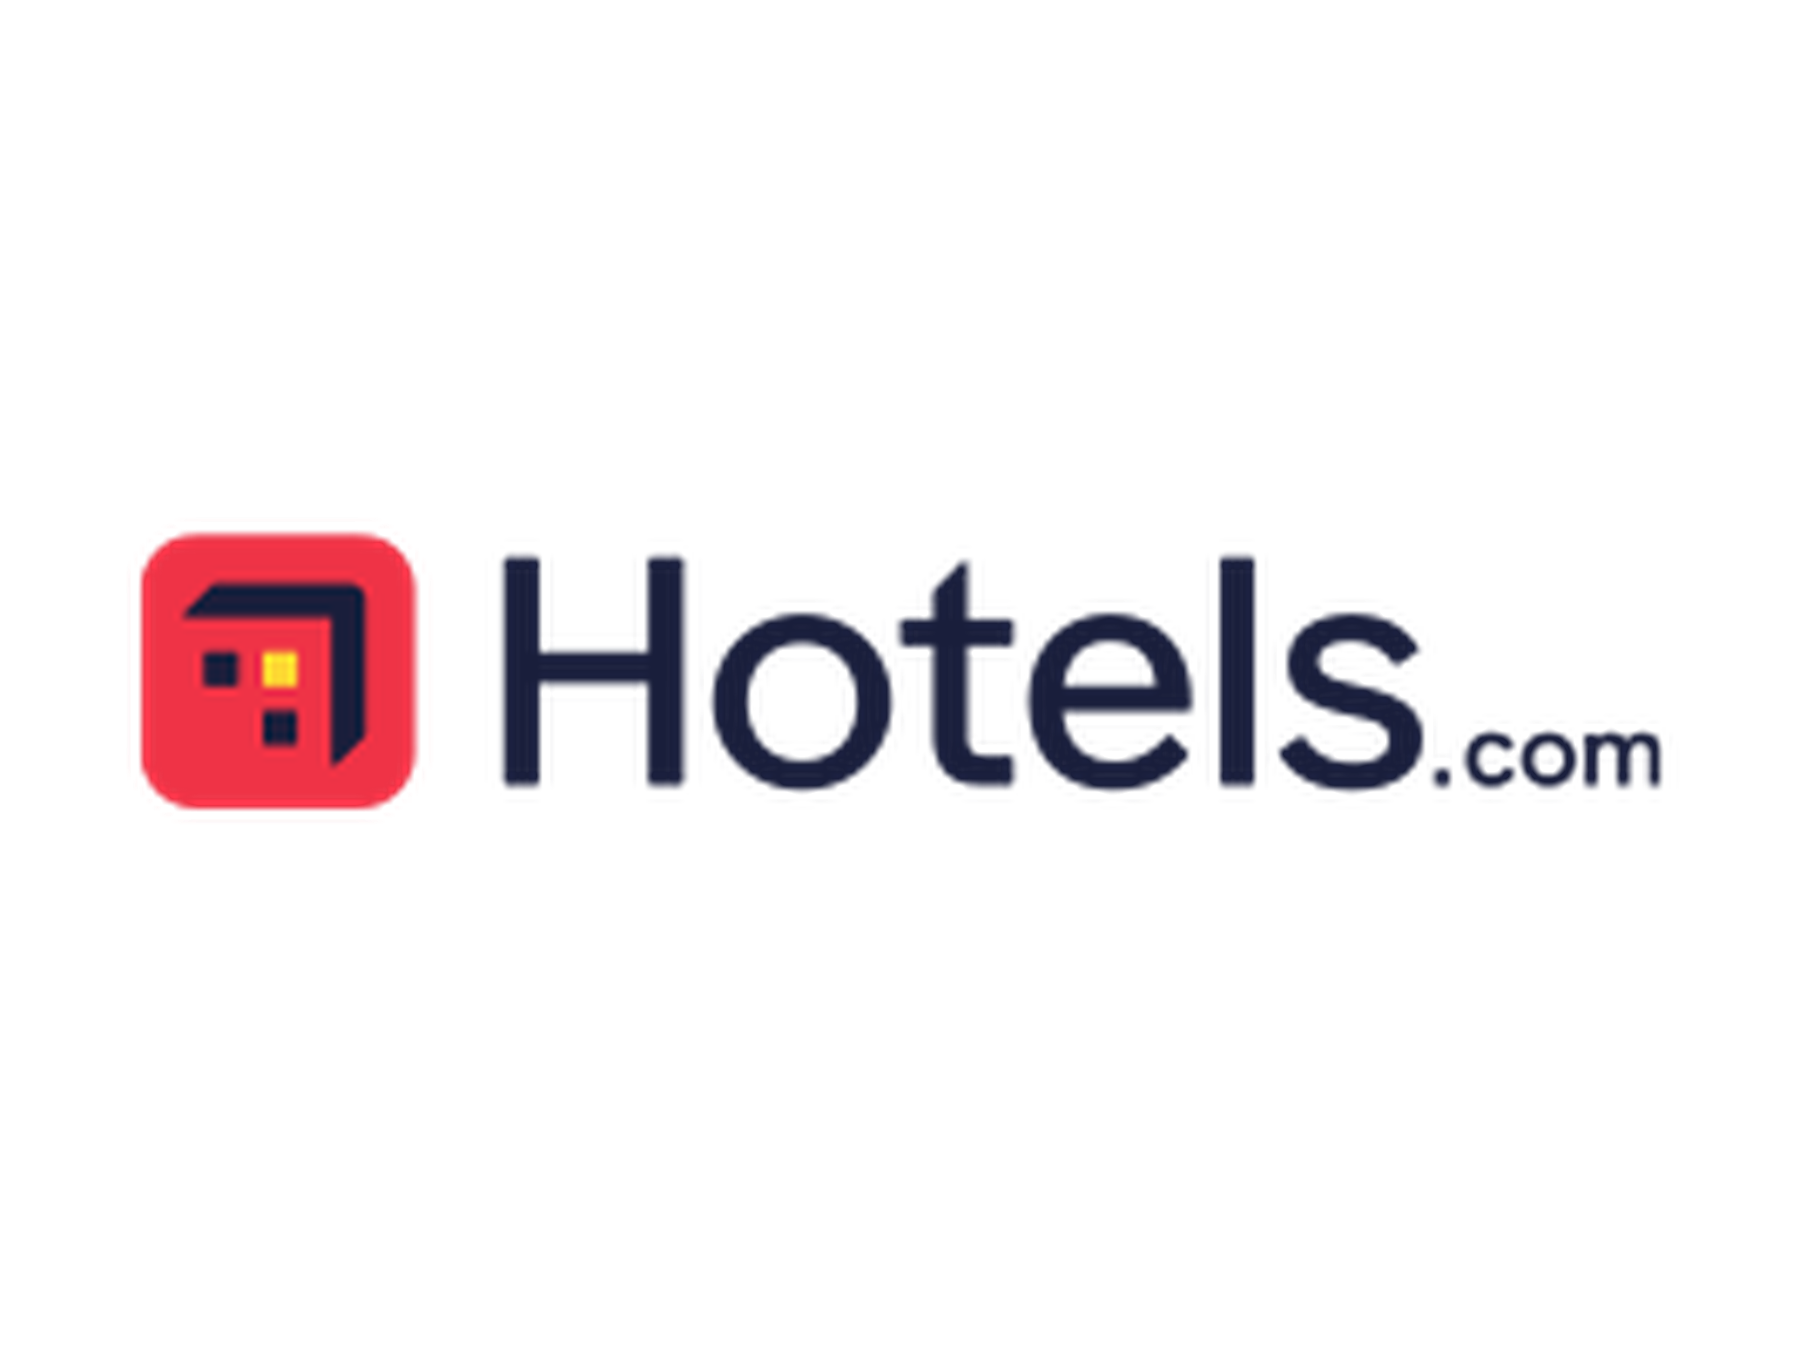 Hotels.com rabatkoder